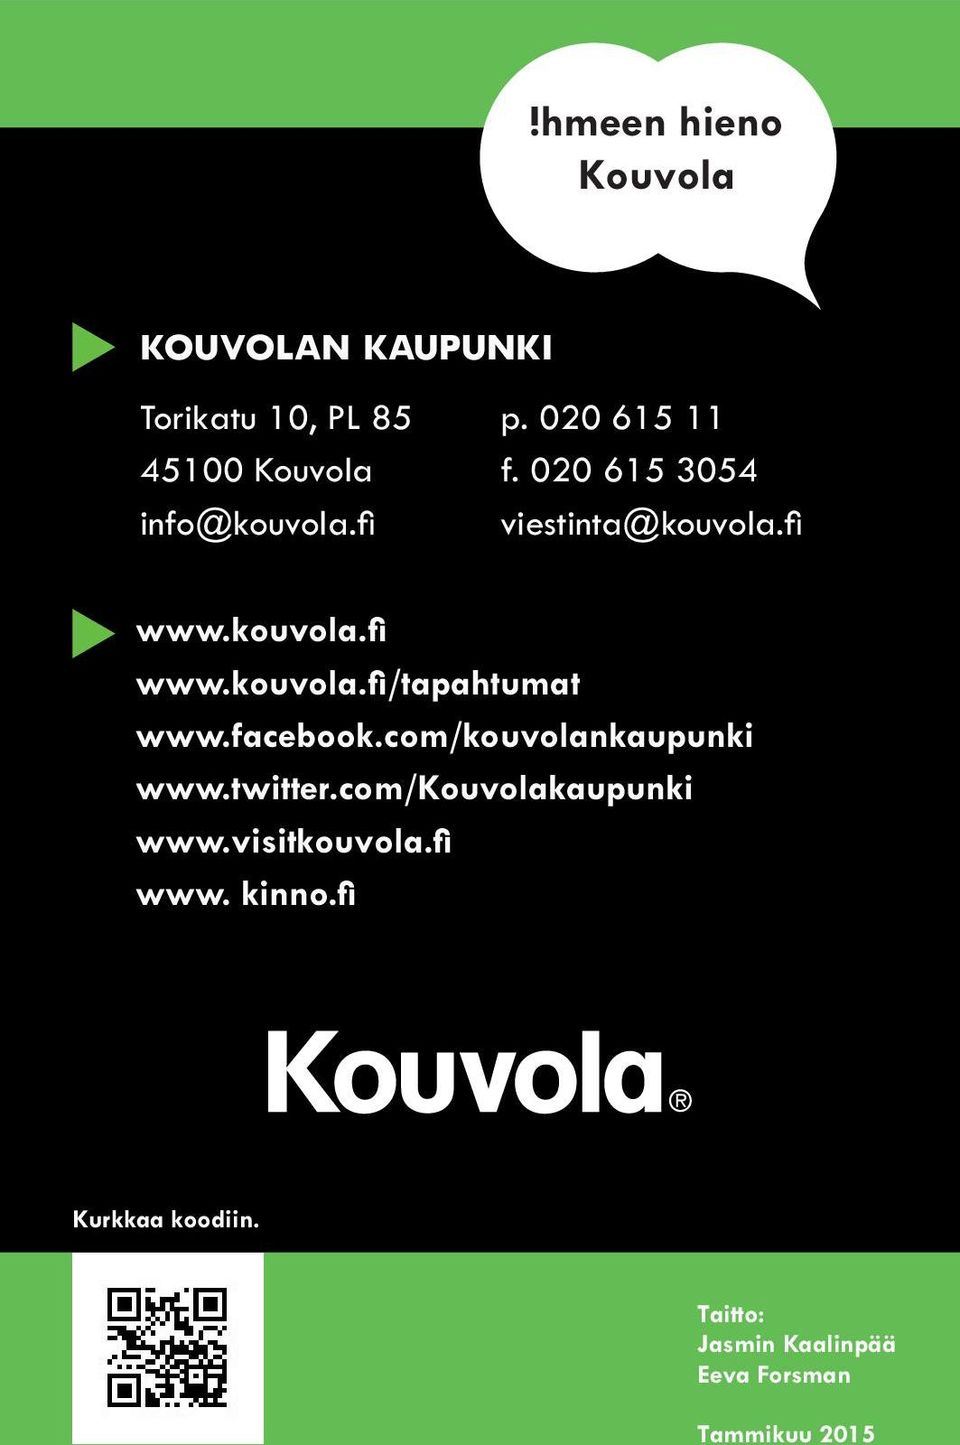 facebook.com/kouvolankaupunki www.twitter.com/kouvolakaupunki www.visitkouvola.fi www.